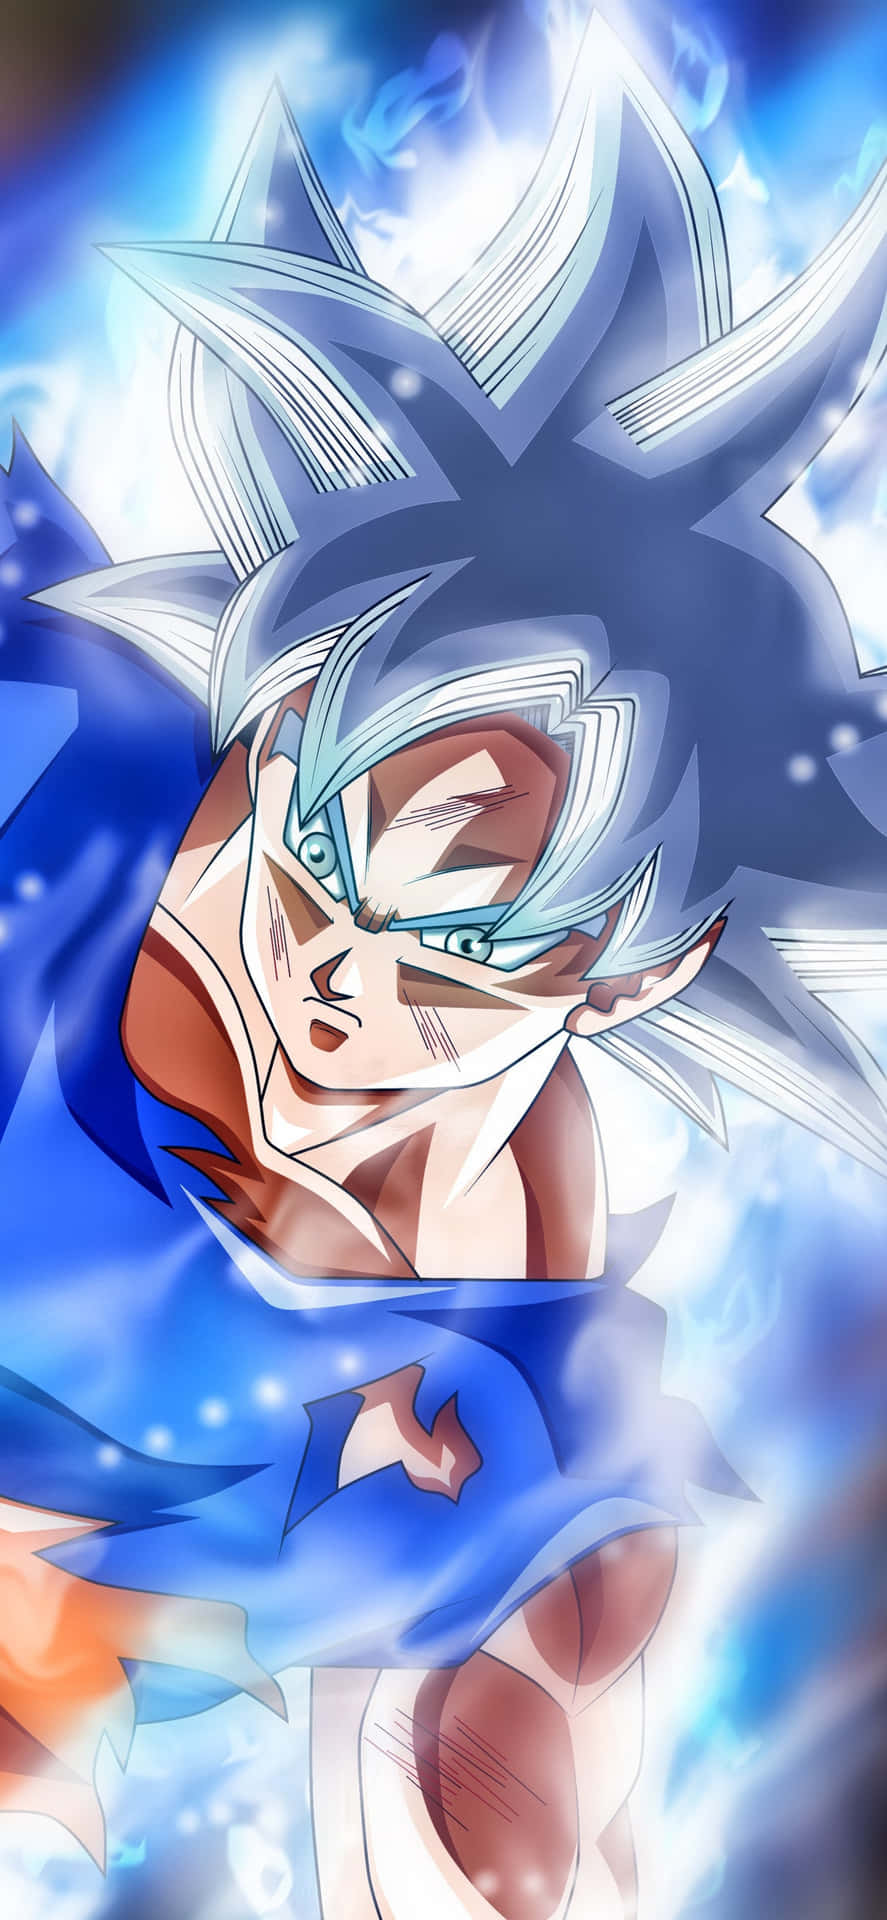 Super Saiyan Blue Goku Power Up Wallpaper